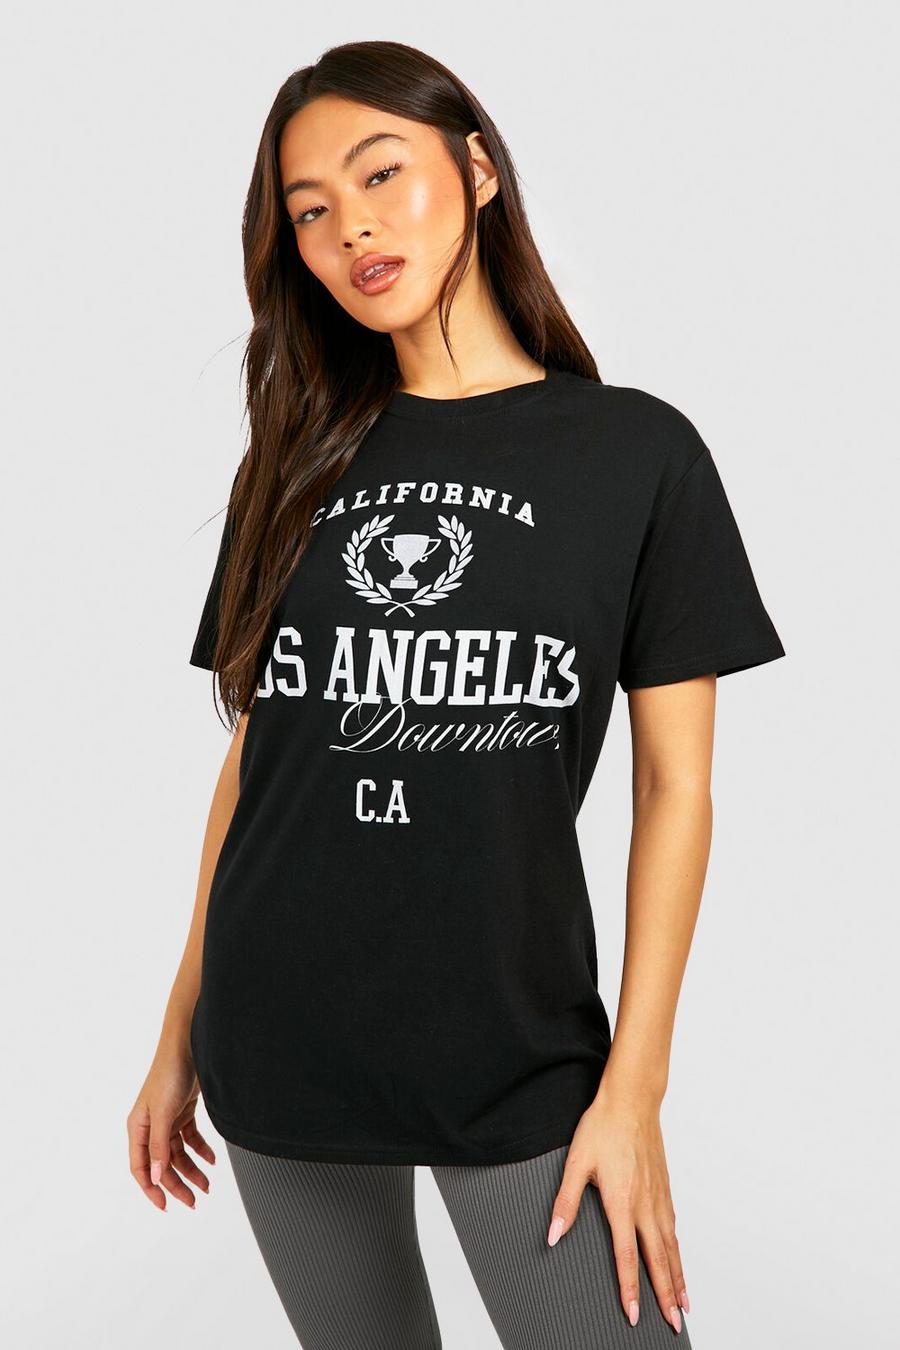 women's los angeles t shirt